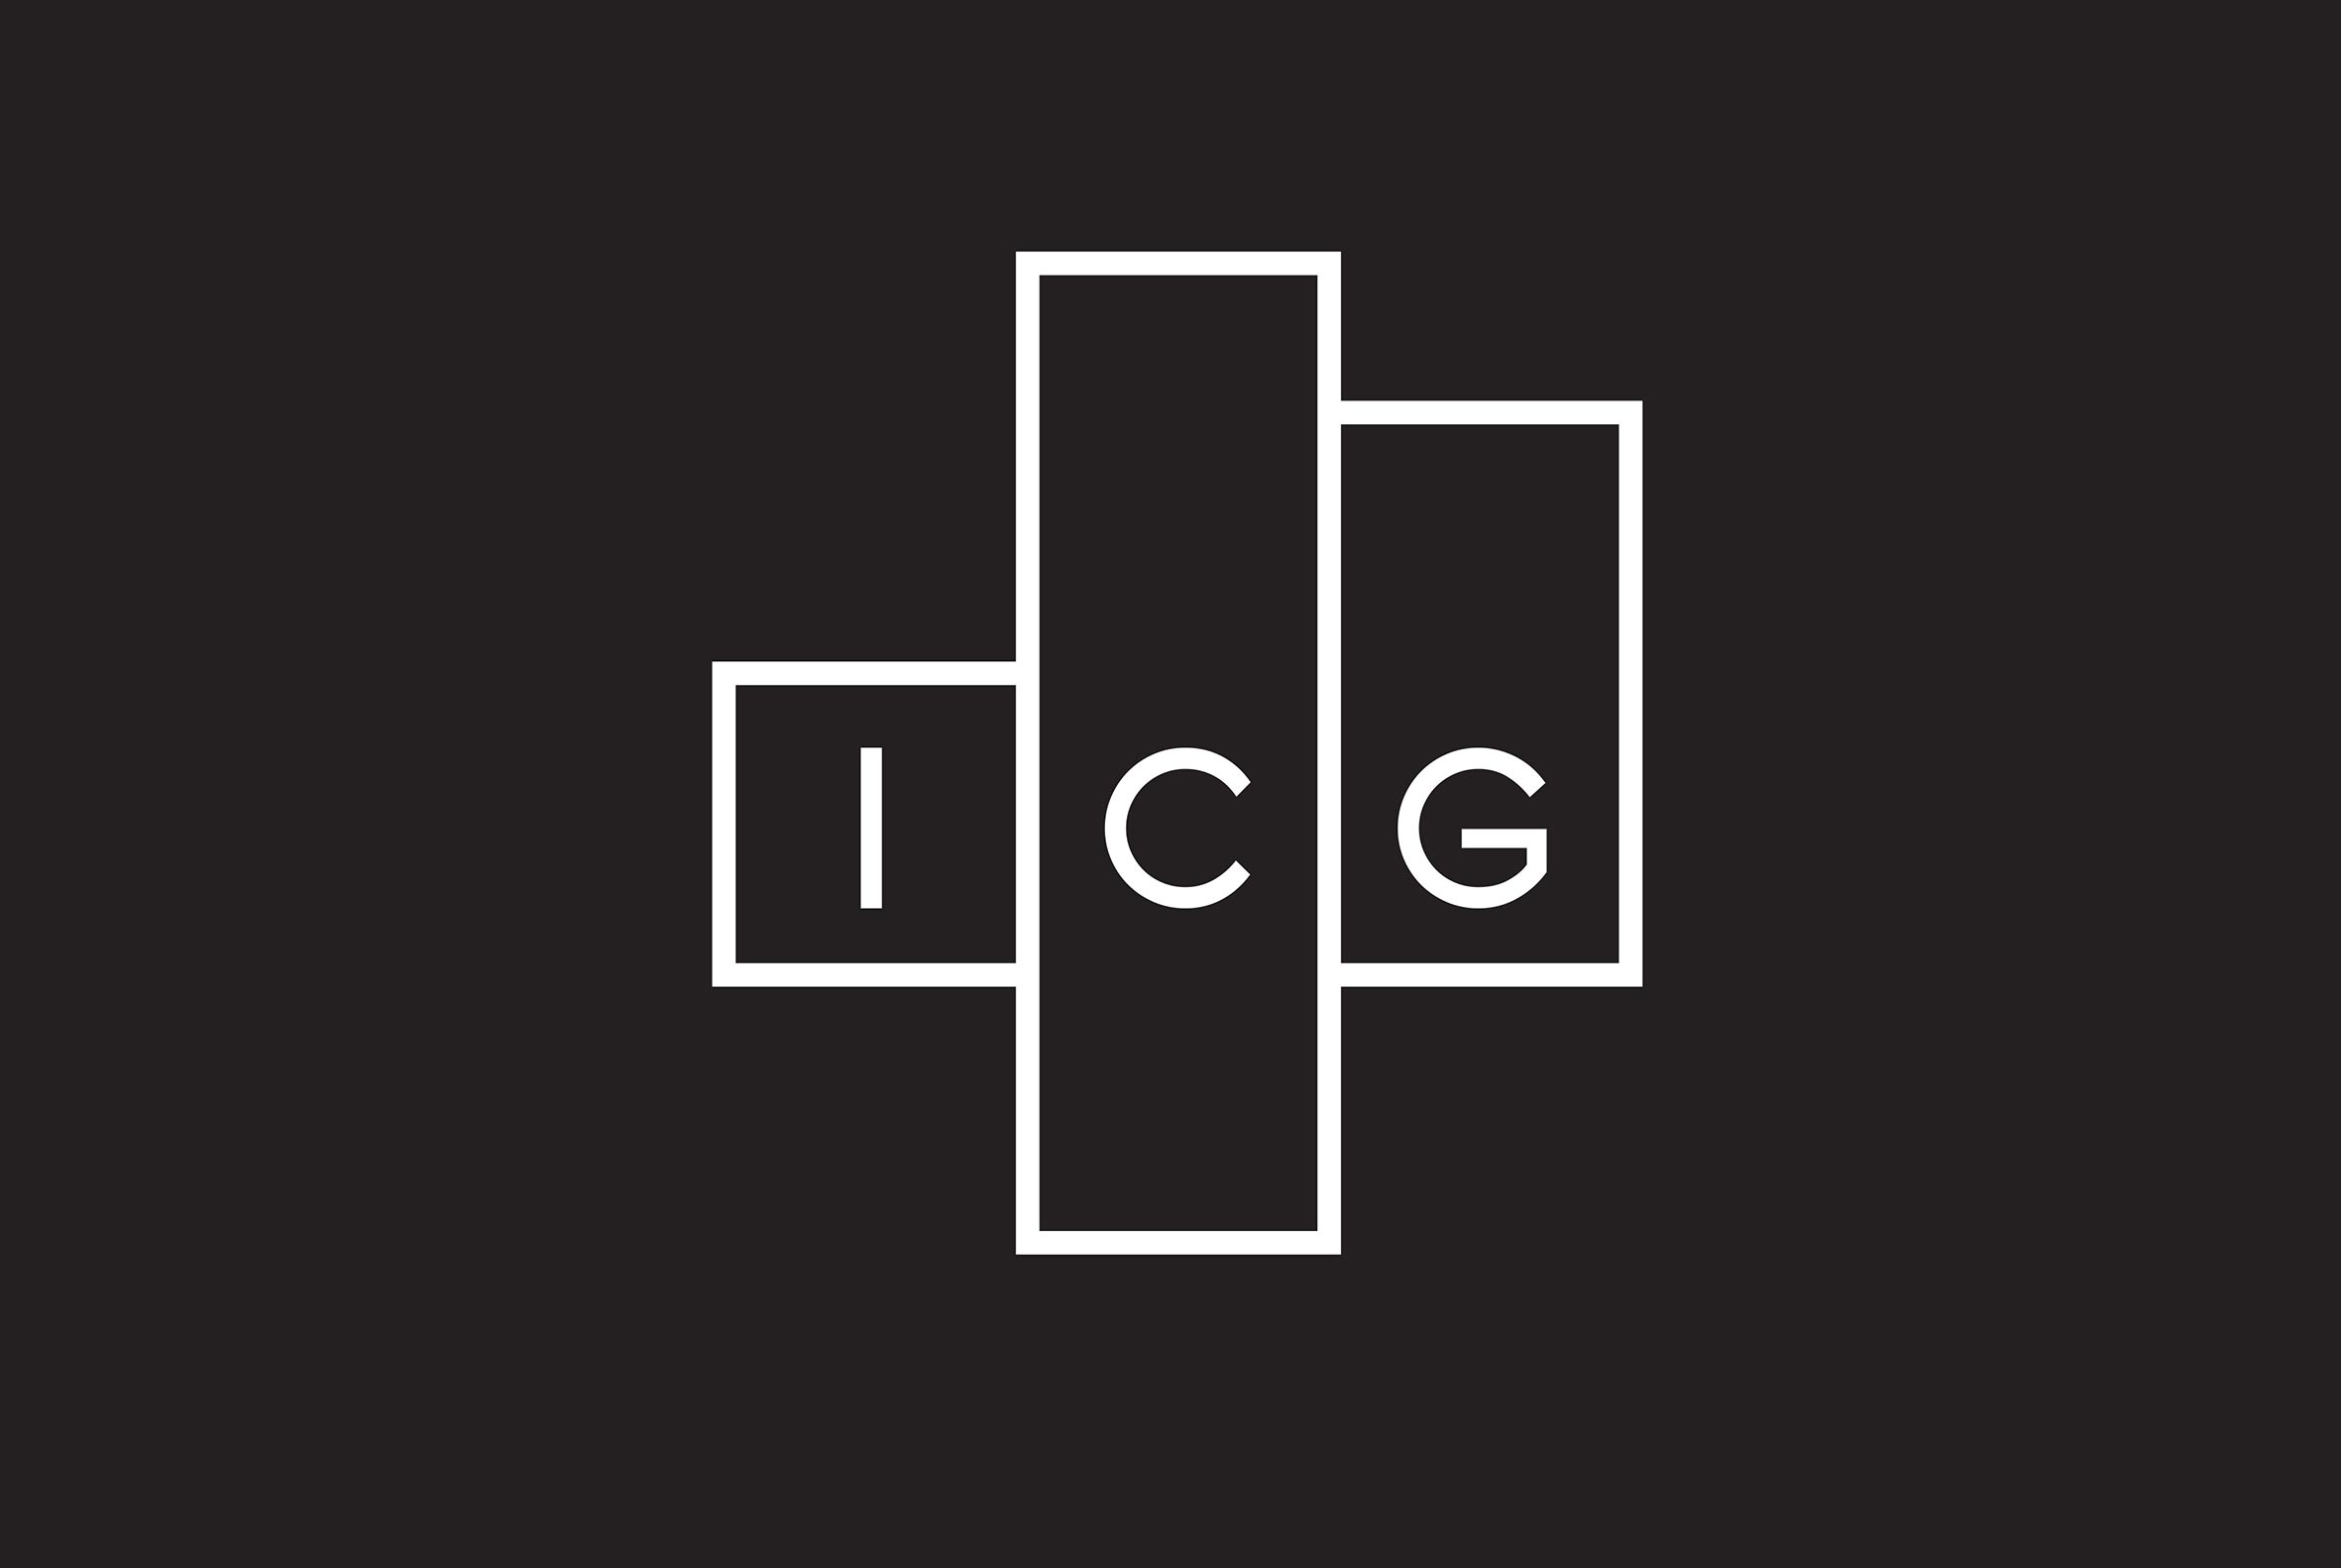 ICG brand mark